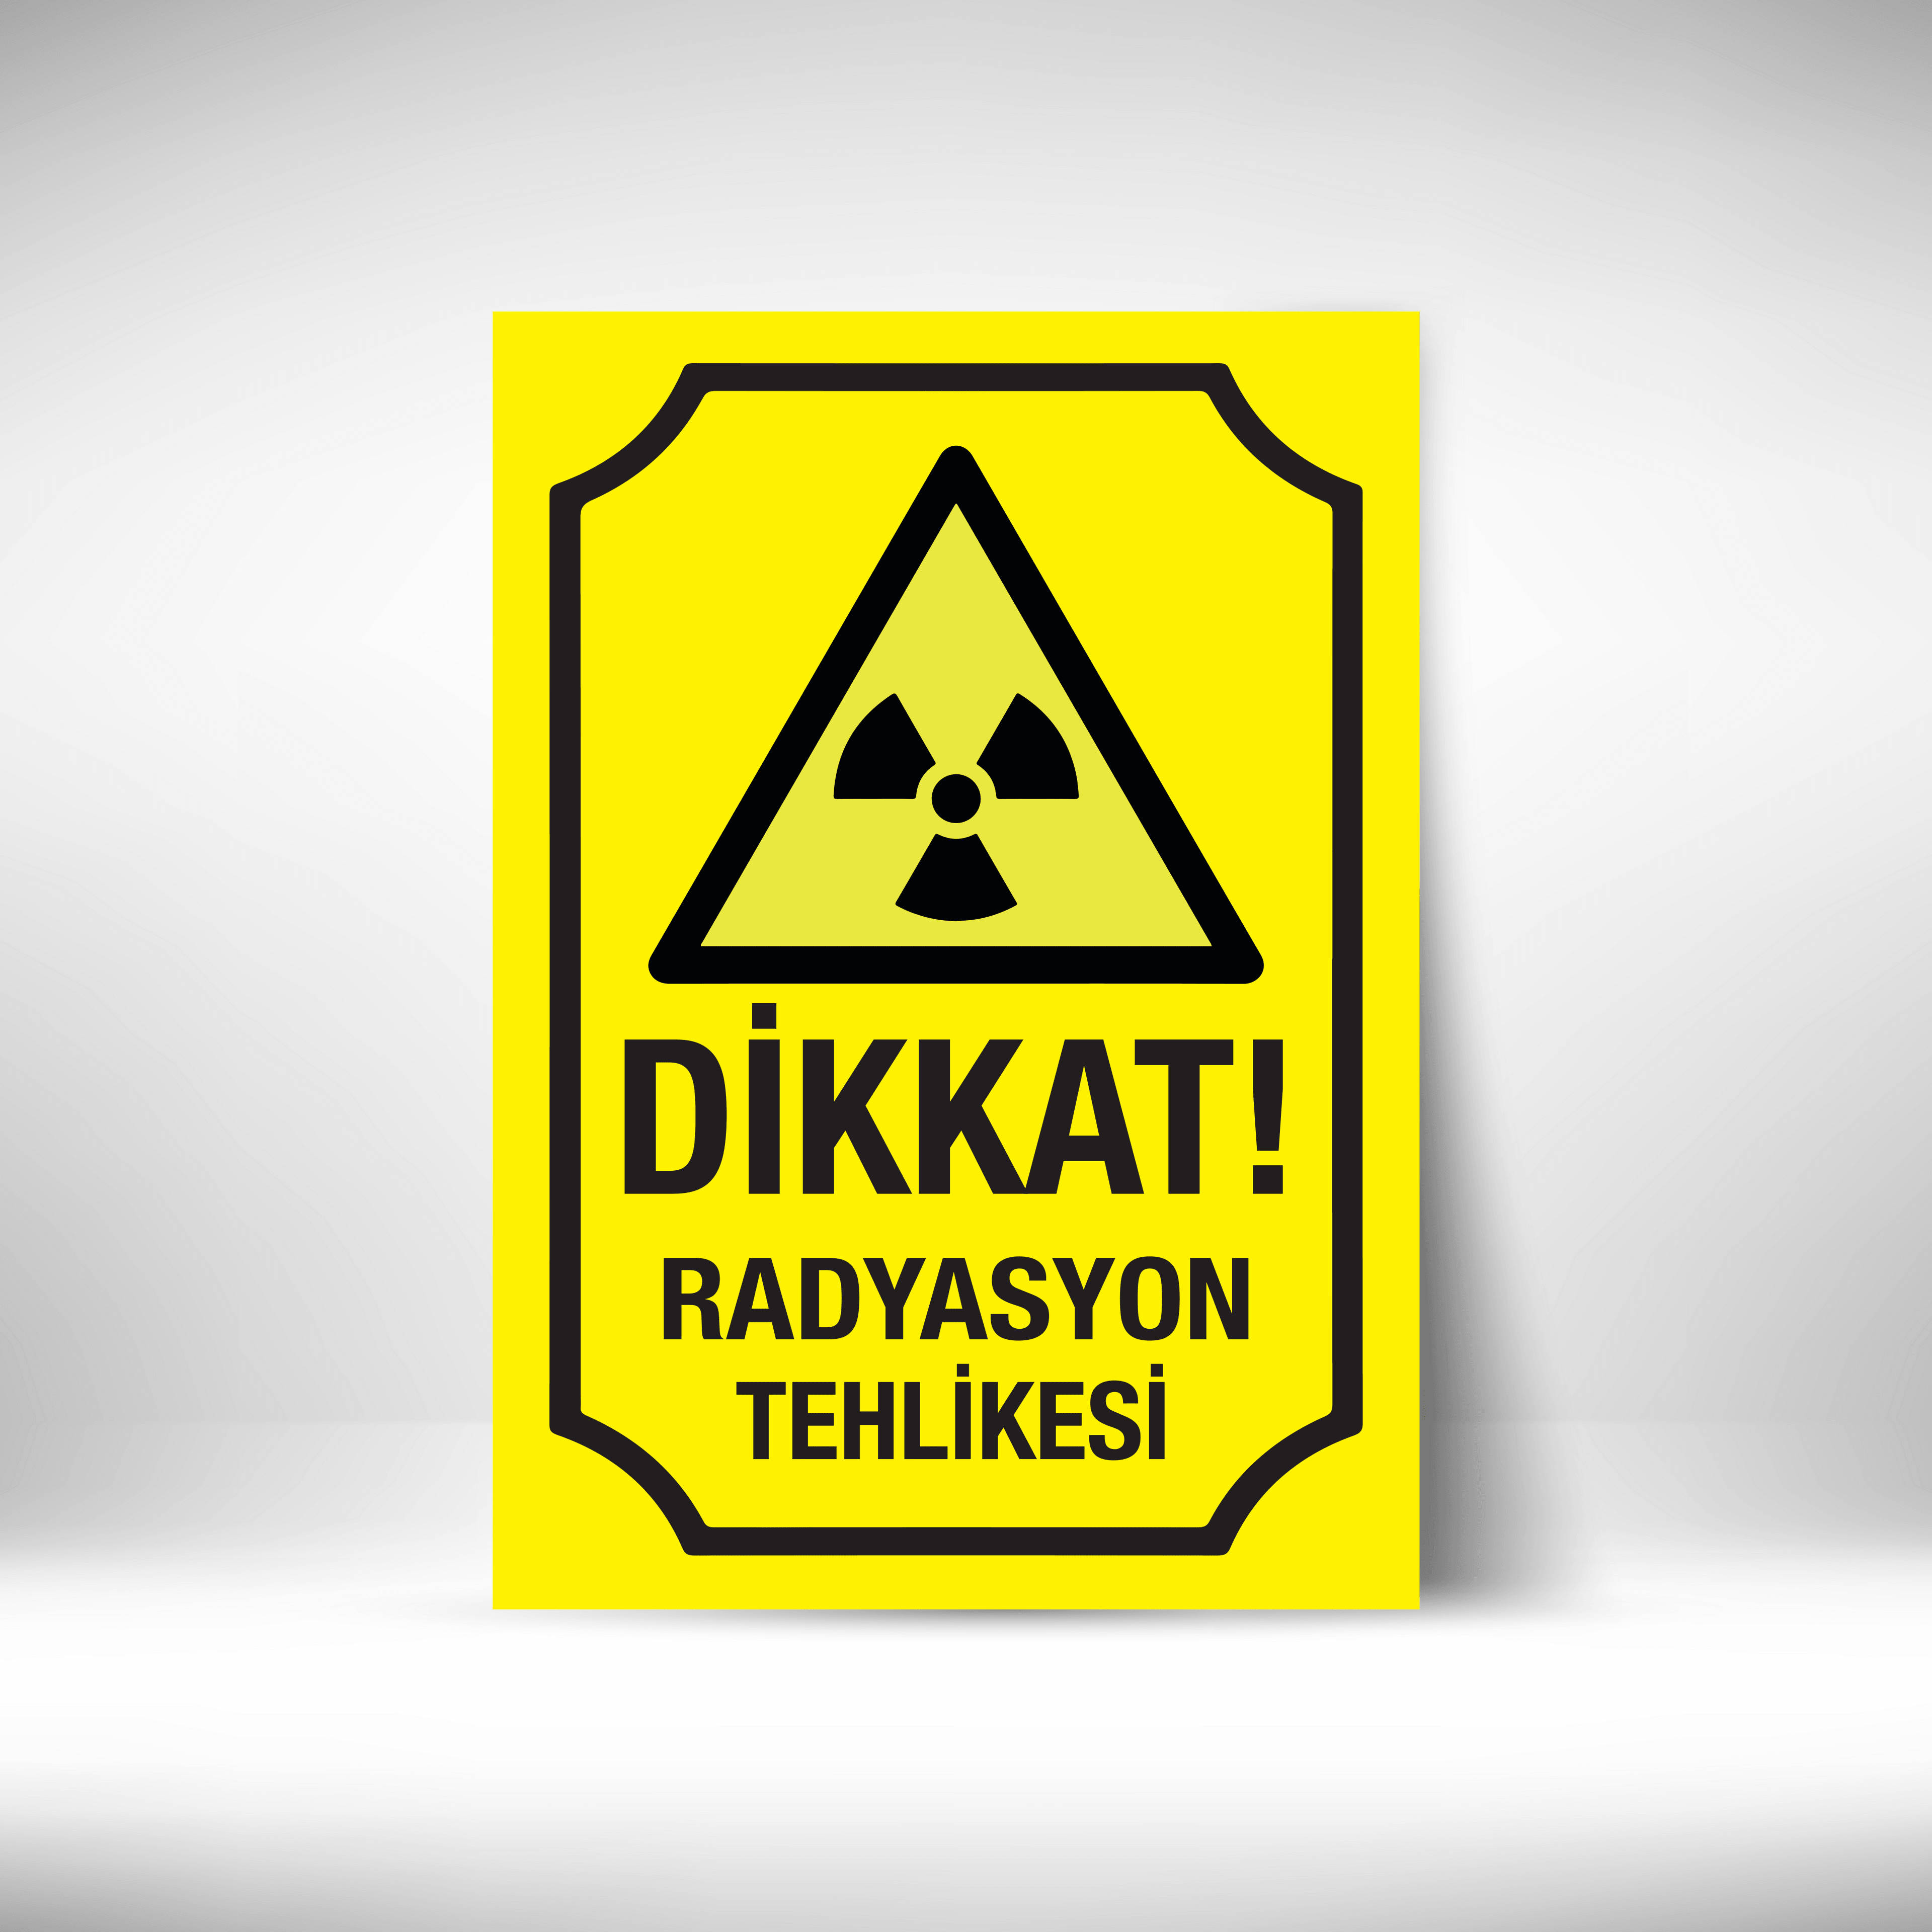 Dikkat Radyasyon Tehlikesi image